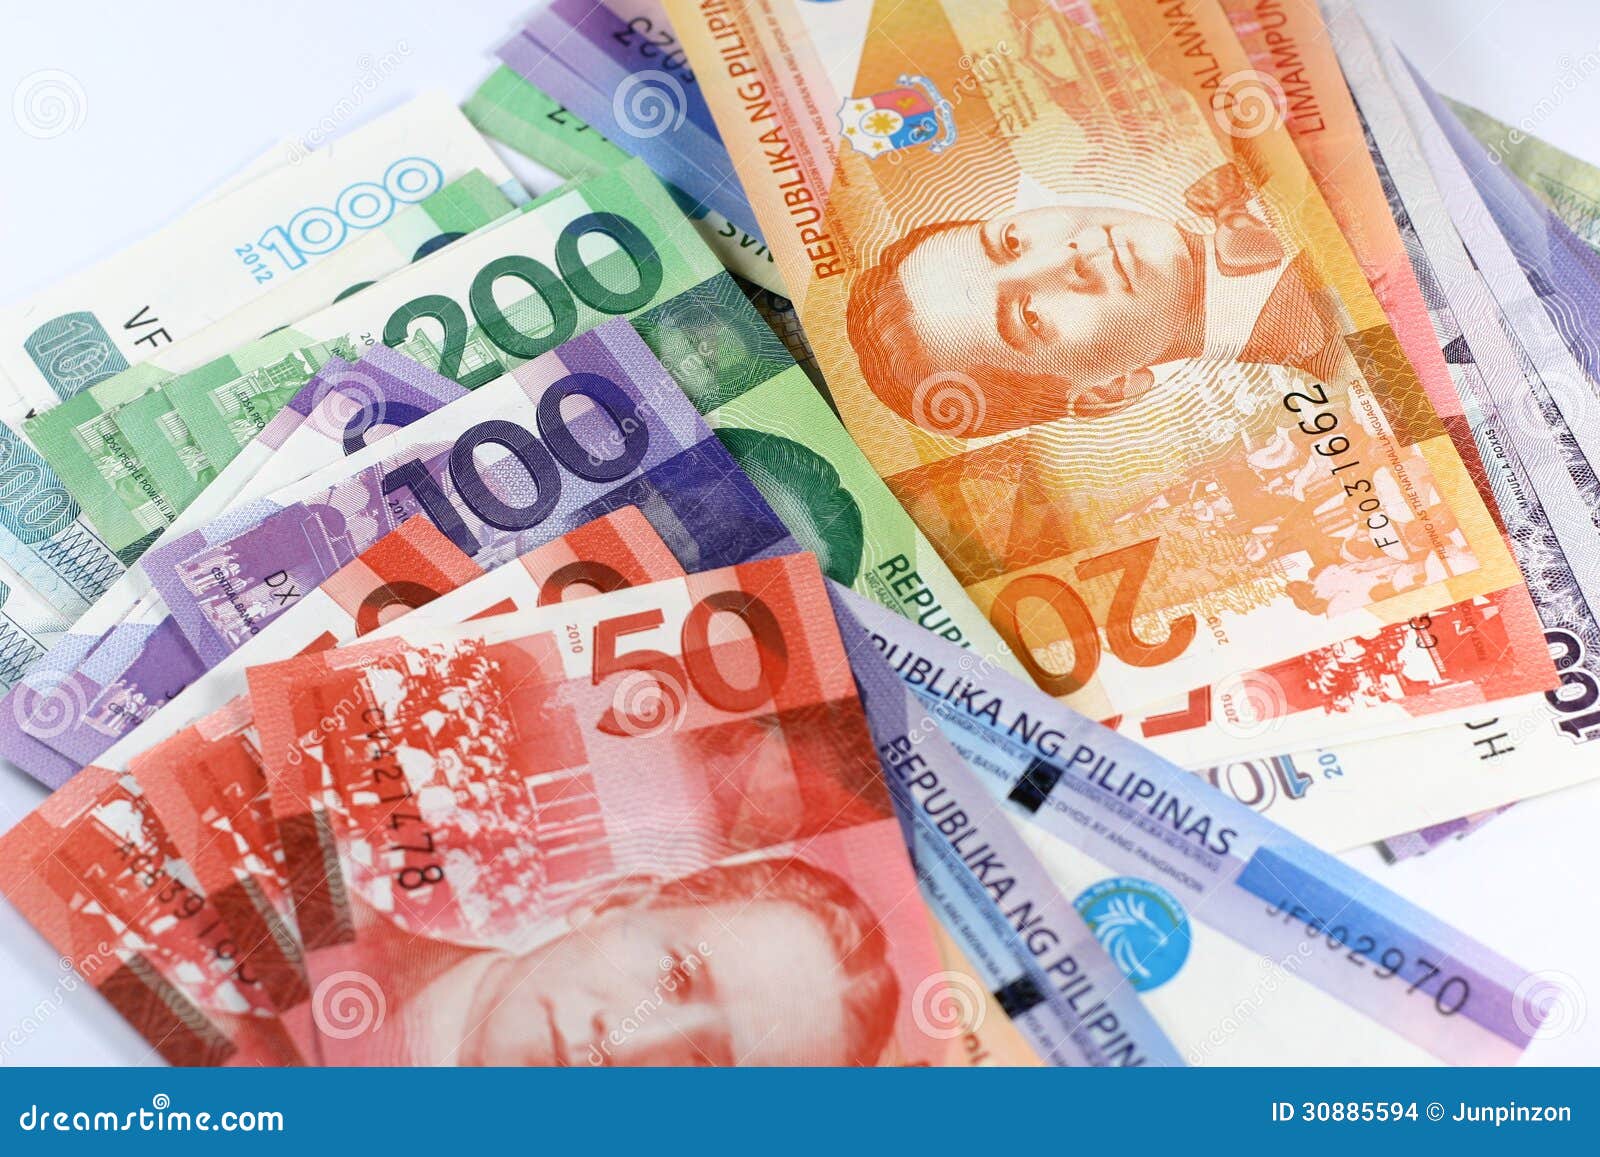 philippine money clipart - photo #39